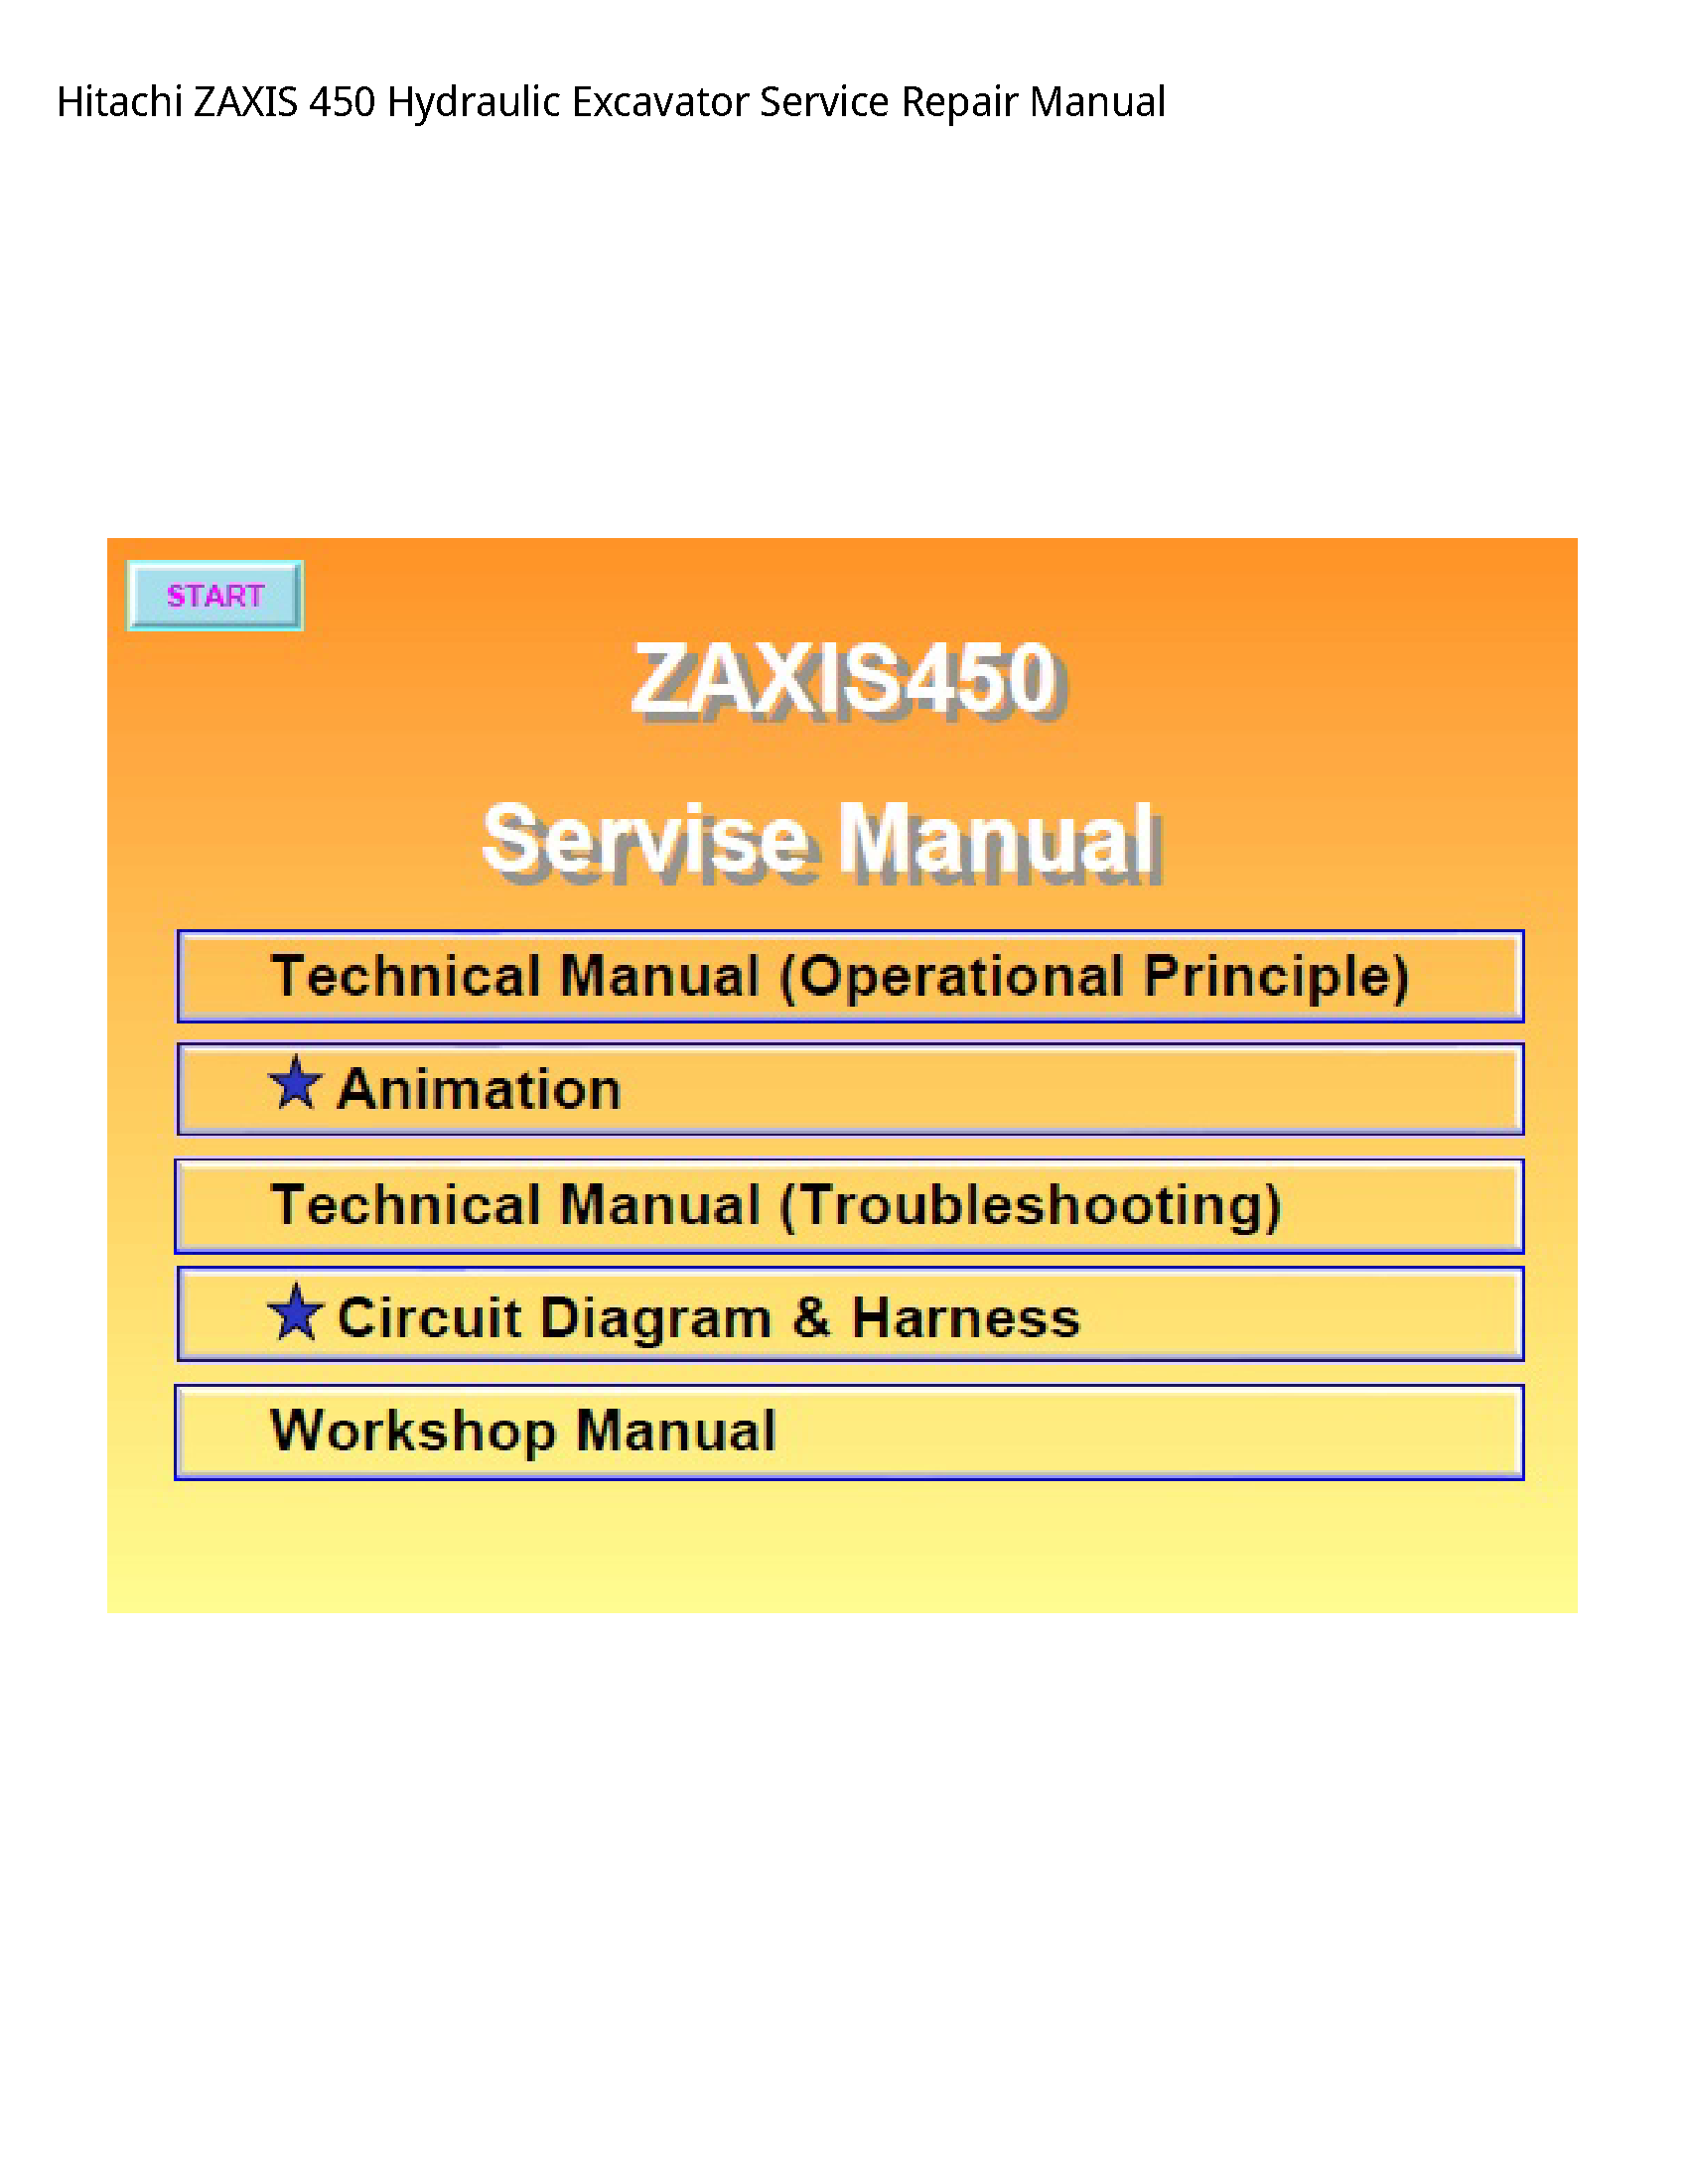 Hitachi 450 ZAXIS Hydraulic Excavator manual